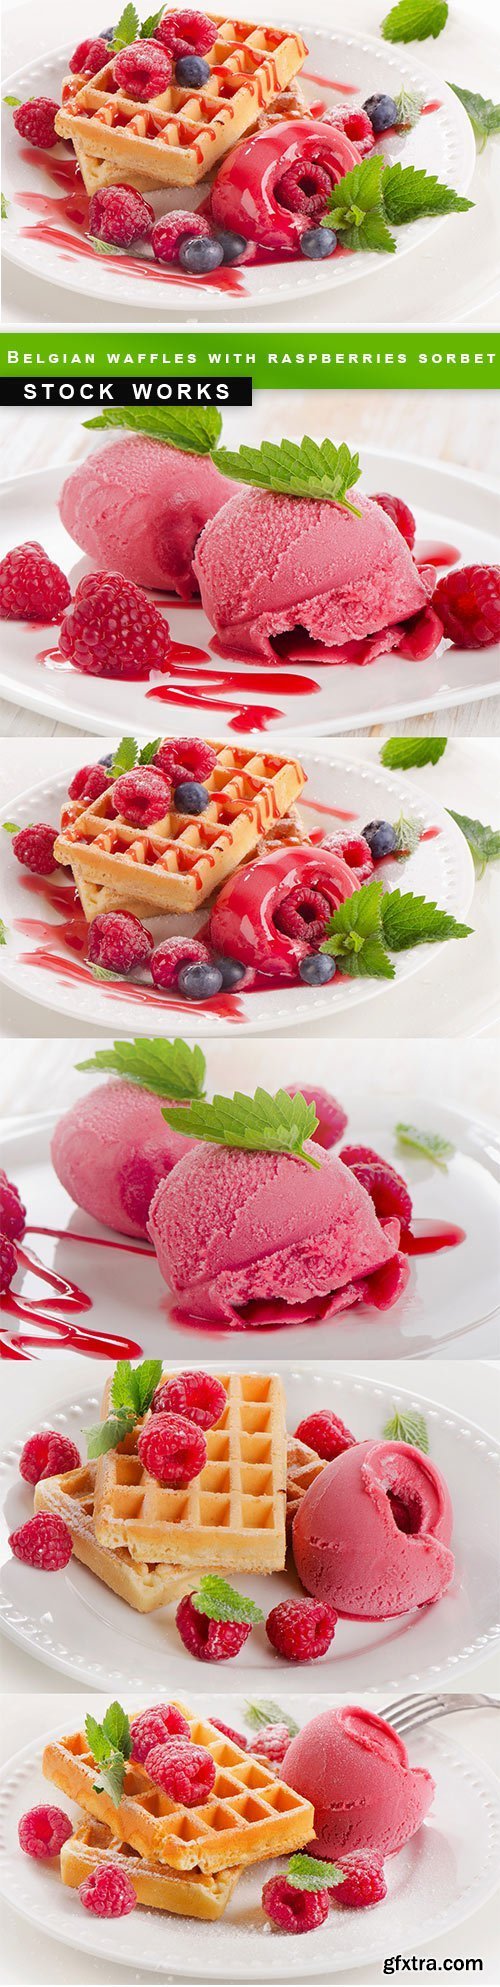 Belgian waffles with raspberries sorbet